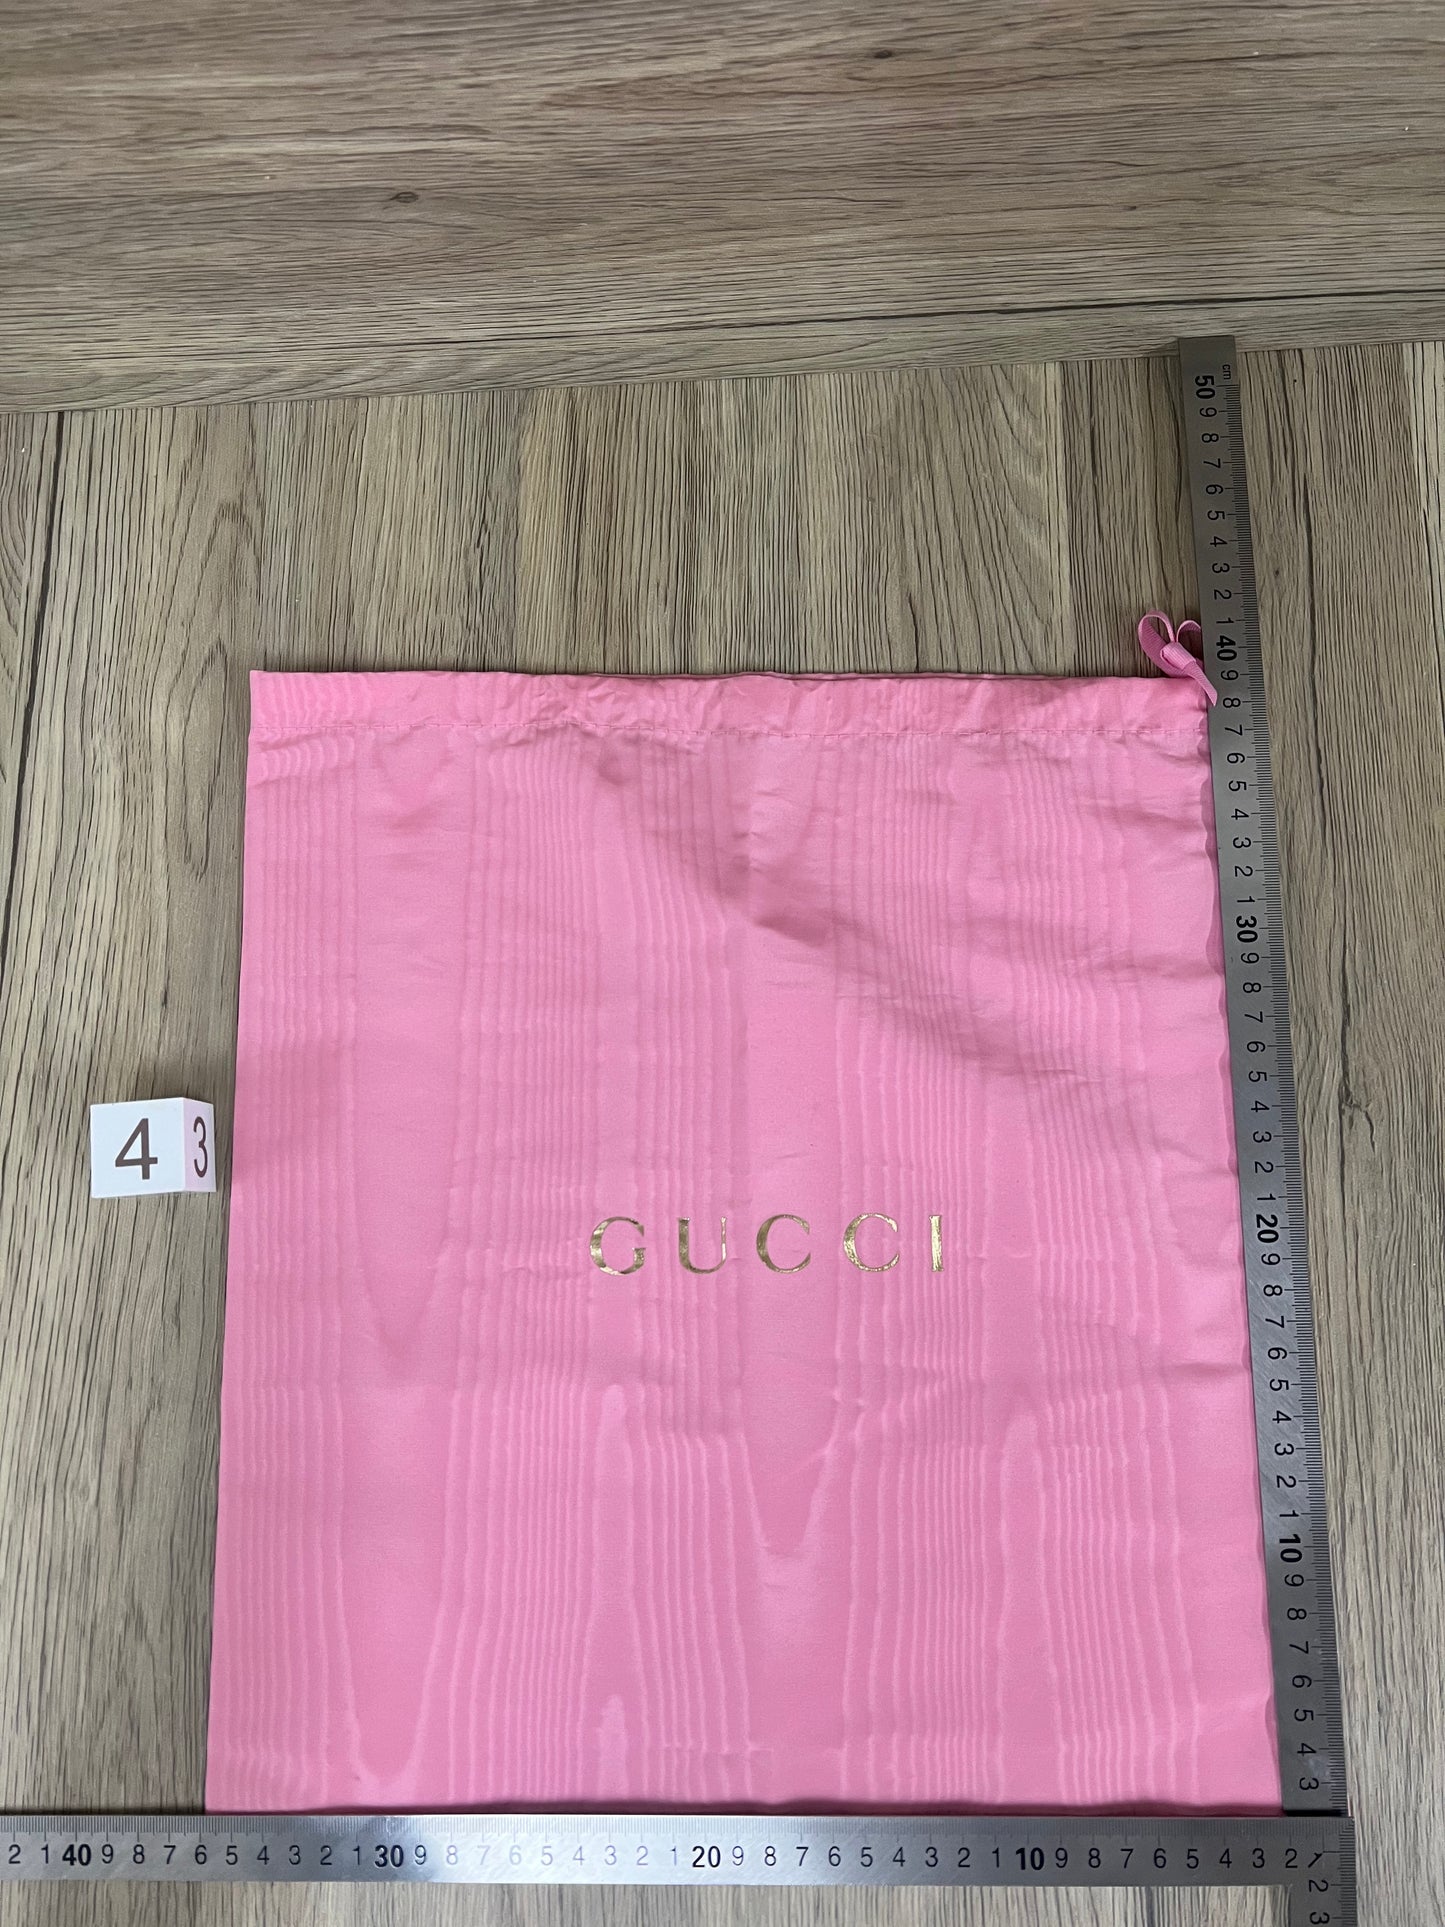 GUCCI Brand Dust Bag Cloth Bag 9 Styles 17Sep22